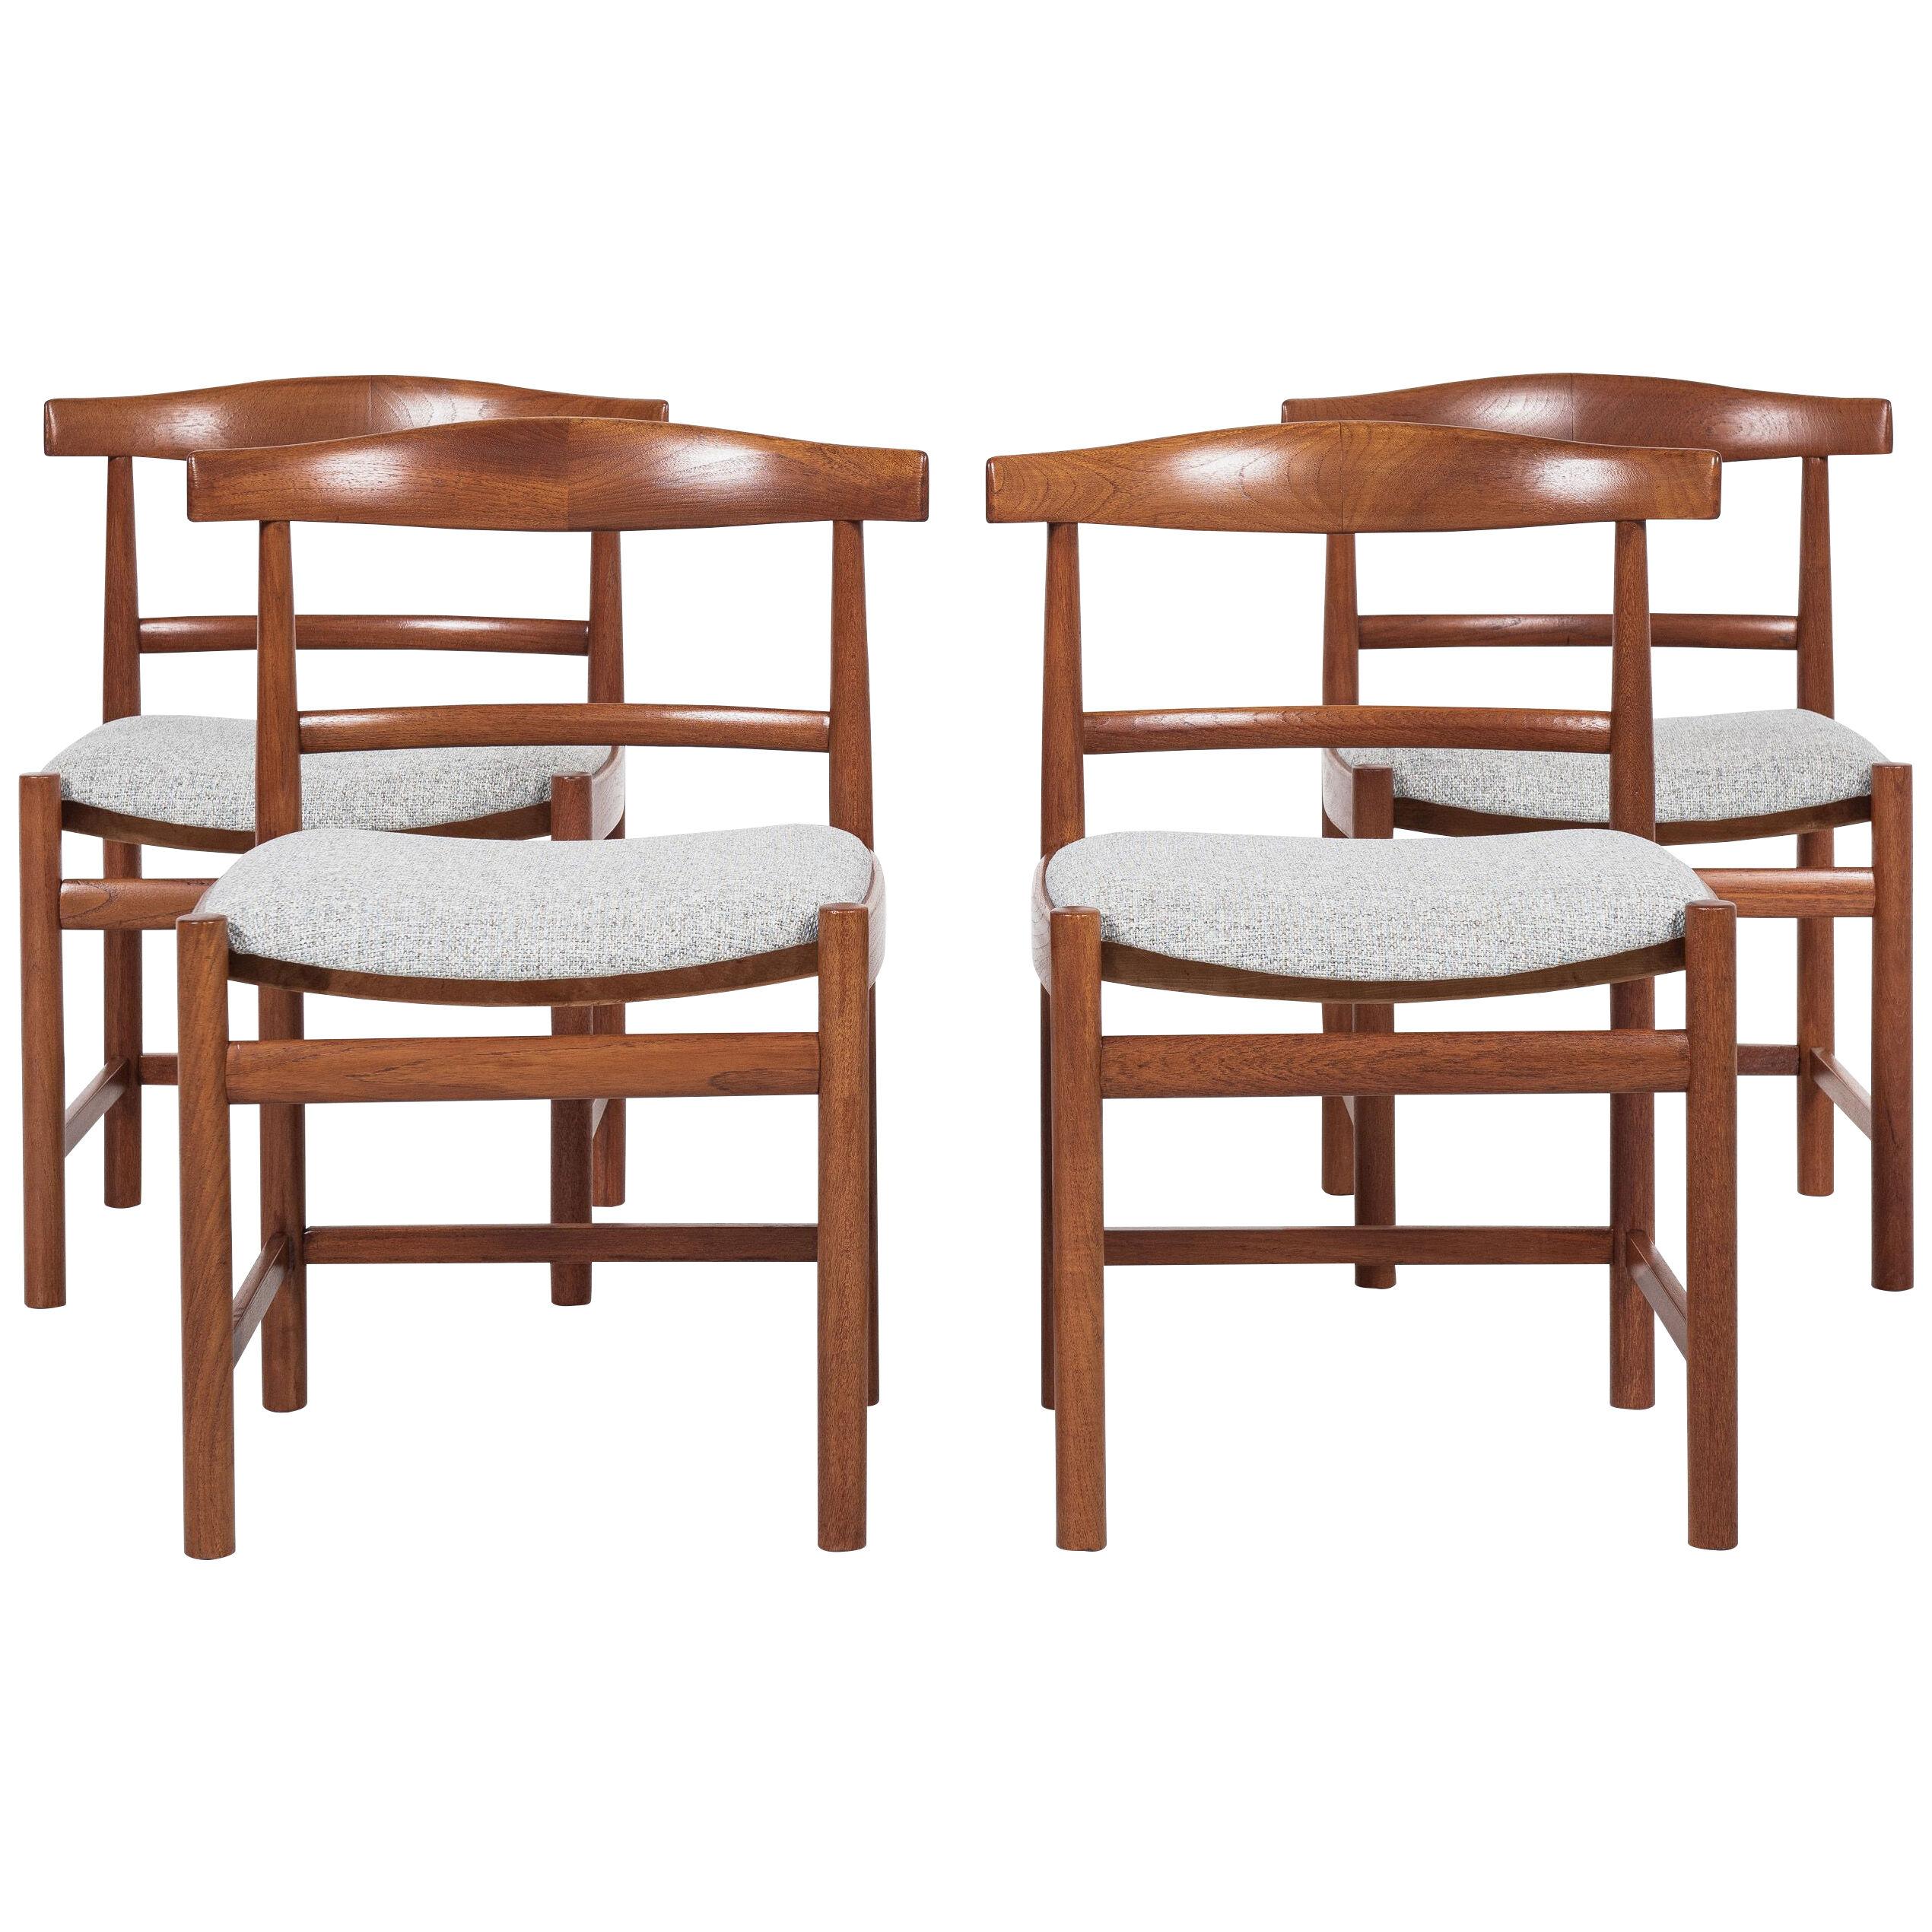 Midcentury Danish set of 4 dining chairs in teak by Søborg Møbler 1960s